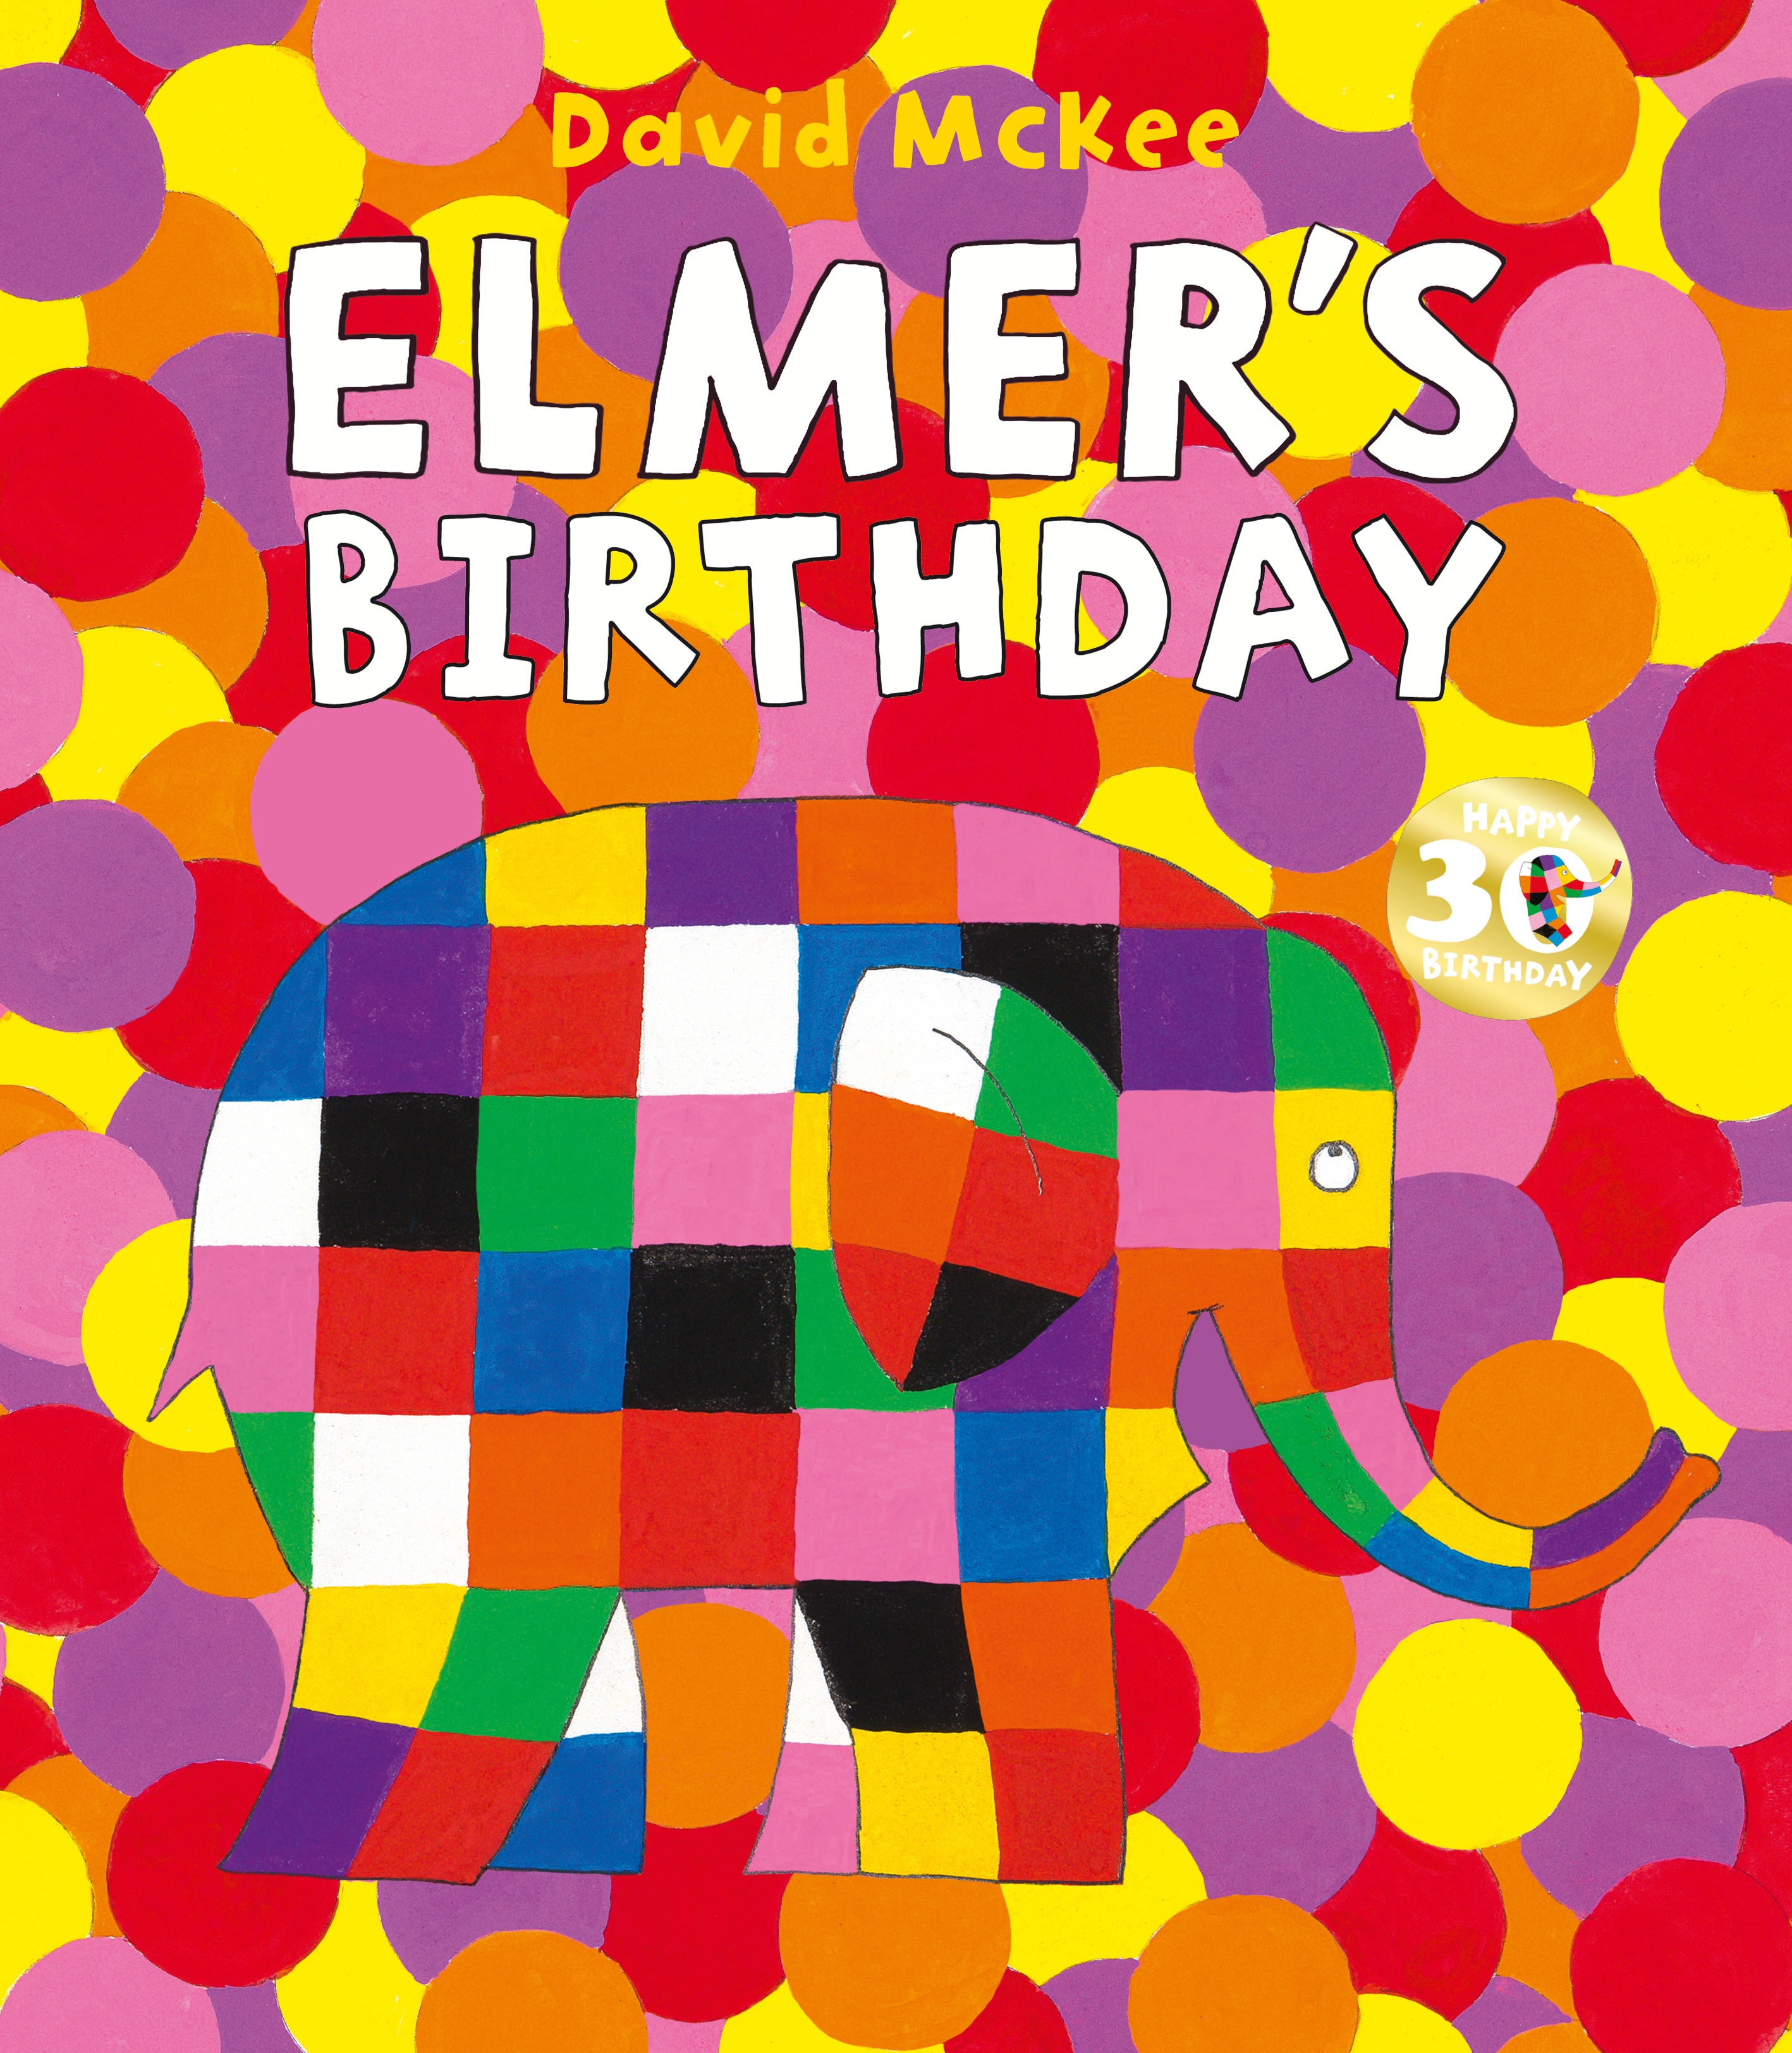 Book “Elmer's Birthday” by David McKee — September 5, 2019